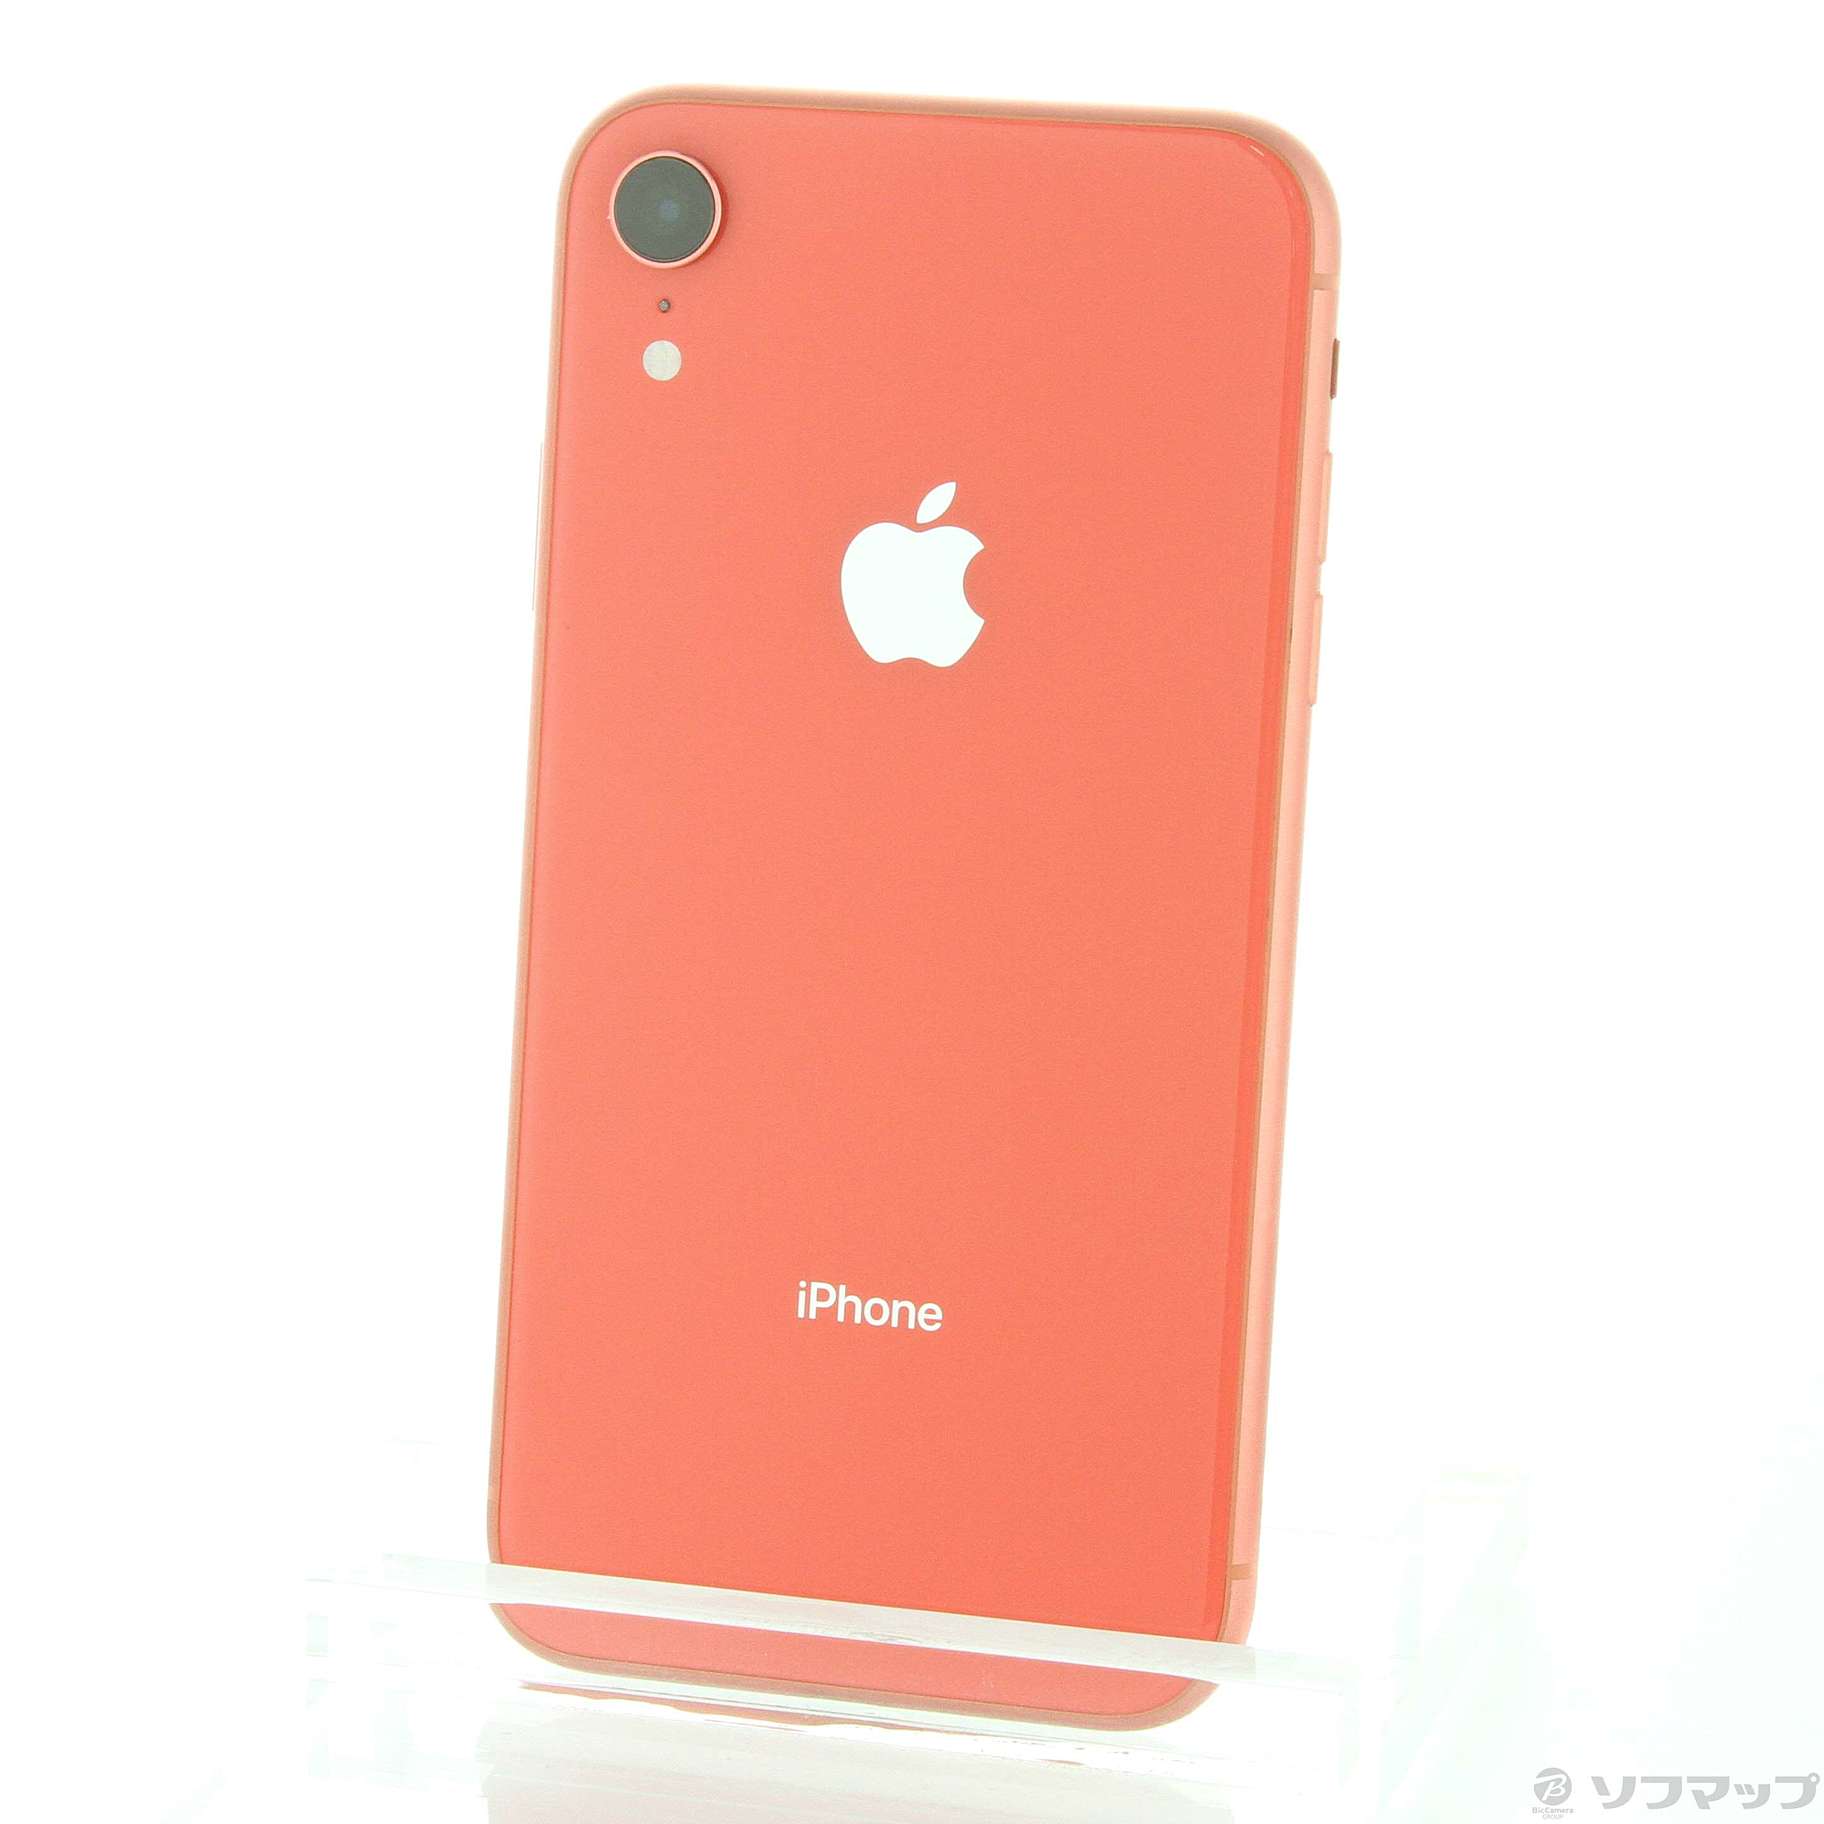 iPhoneXR 64GB  オレンジ